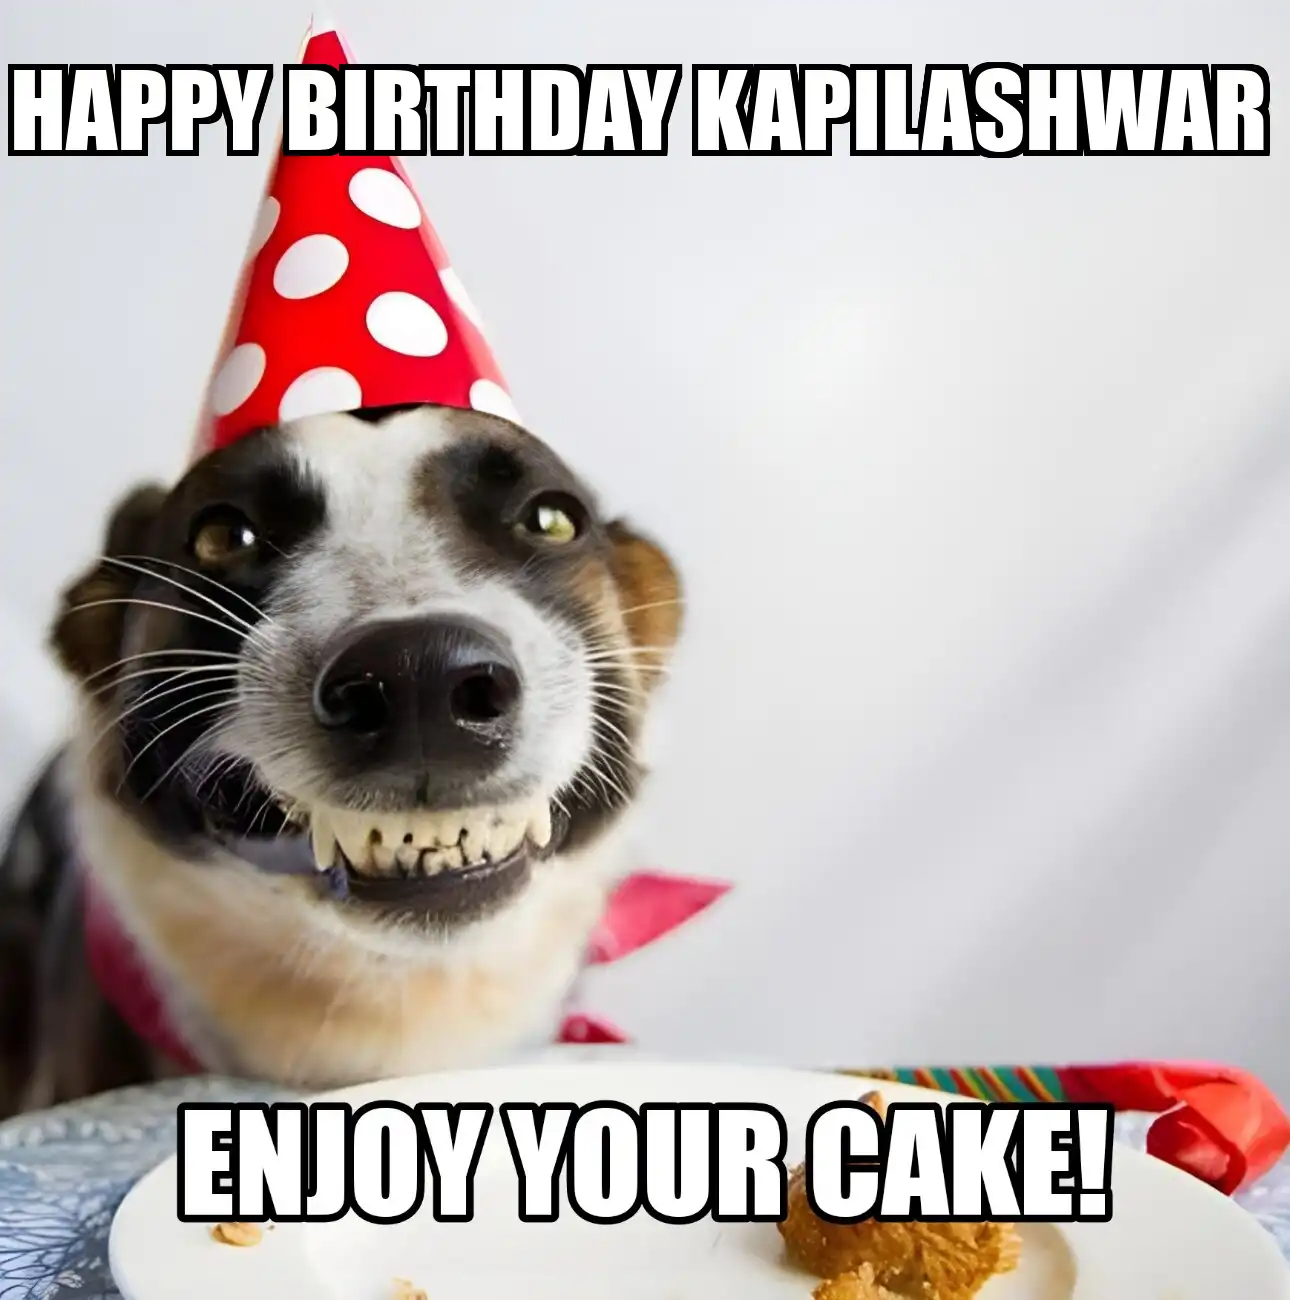 Happy Birthday Kapilashwar Enjoy Your Cake Dog Meme